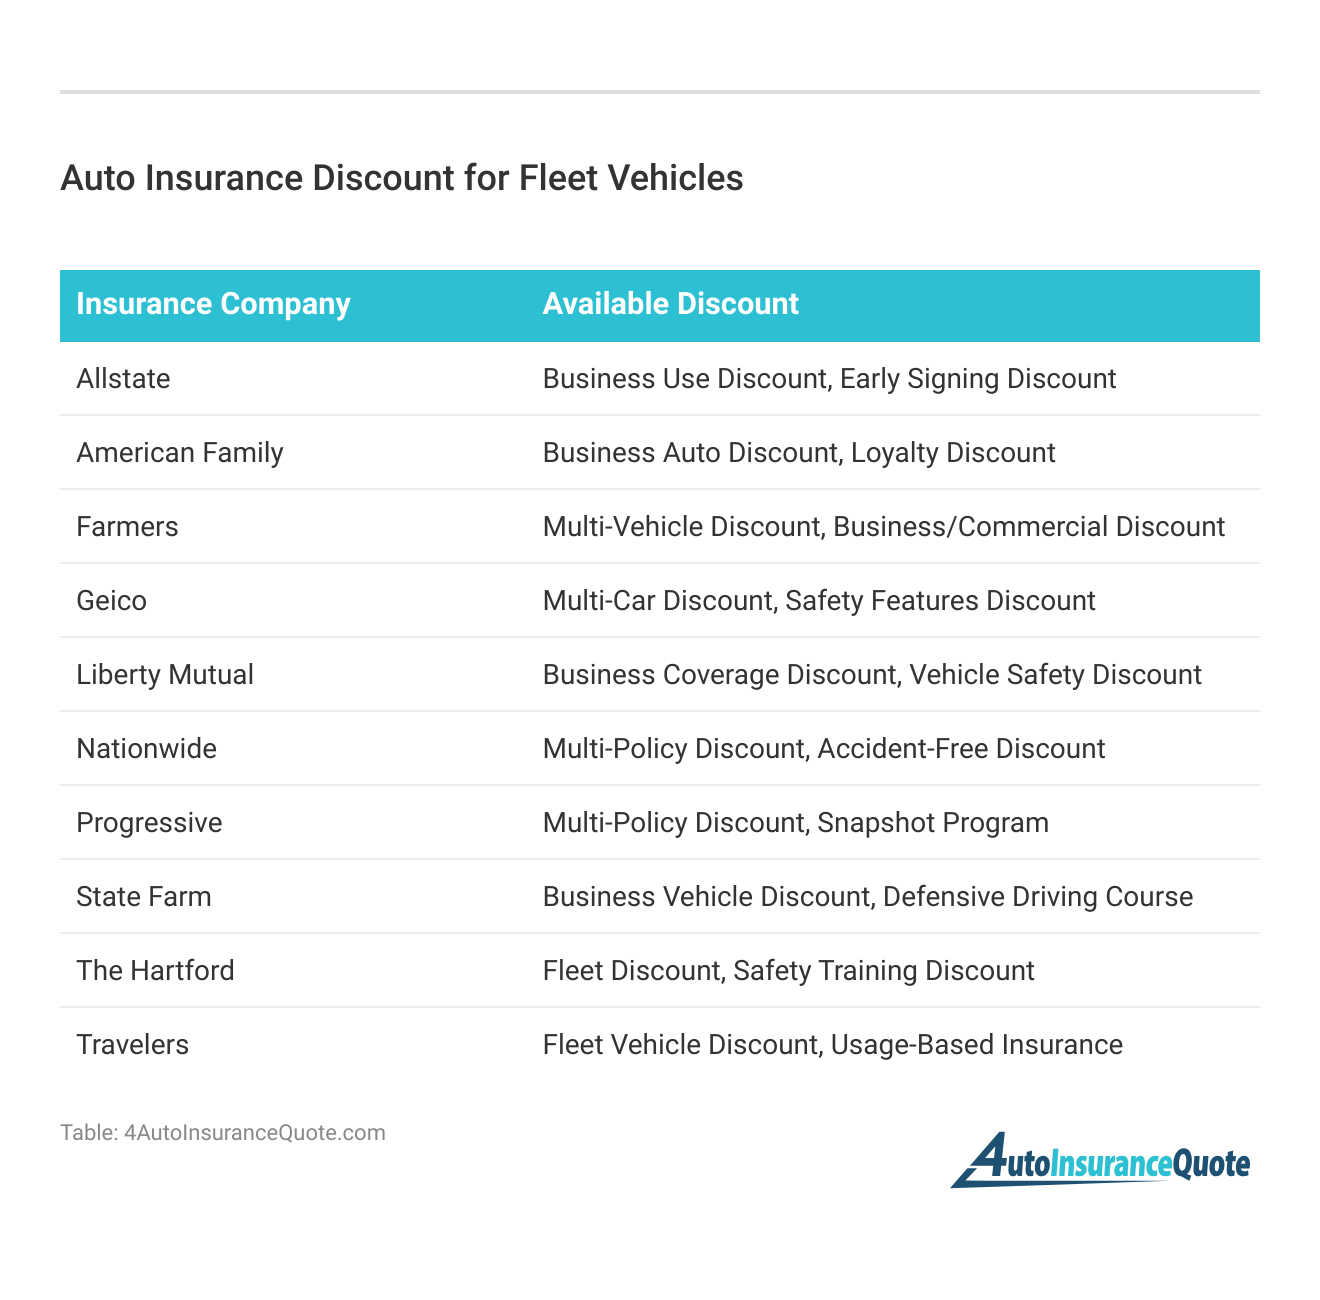 <h3>Auto Insurance Discount for Fleet Vehicles</h3>